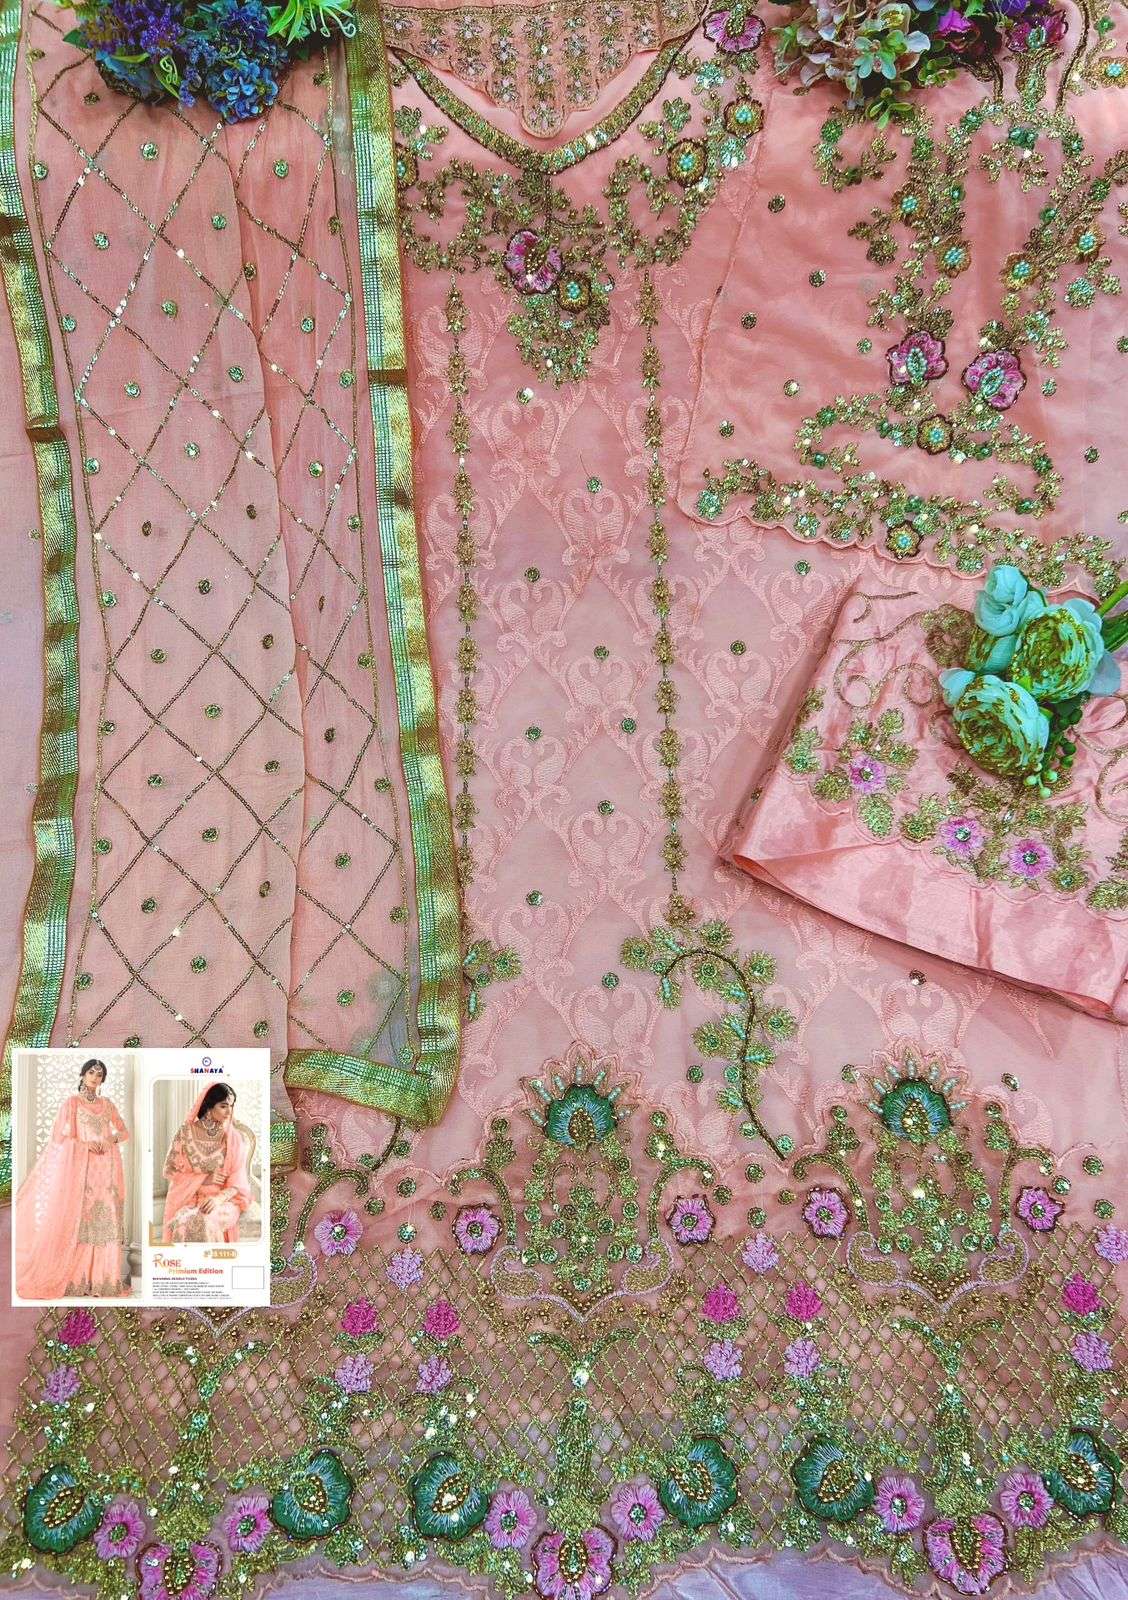 shanaya 111 series stylish designer pakistani salwar kameez wholesaler surat